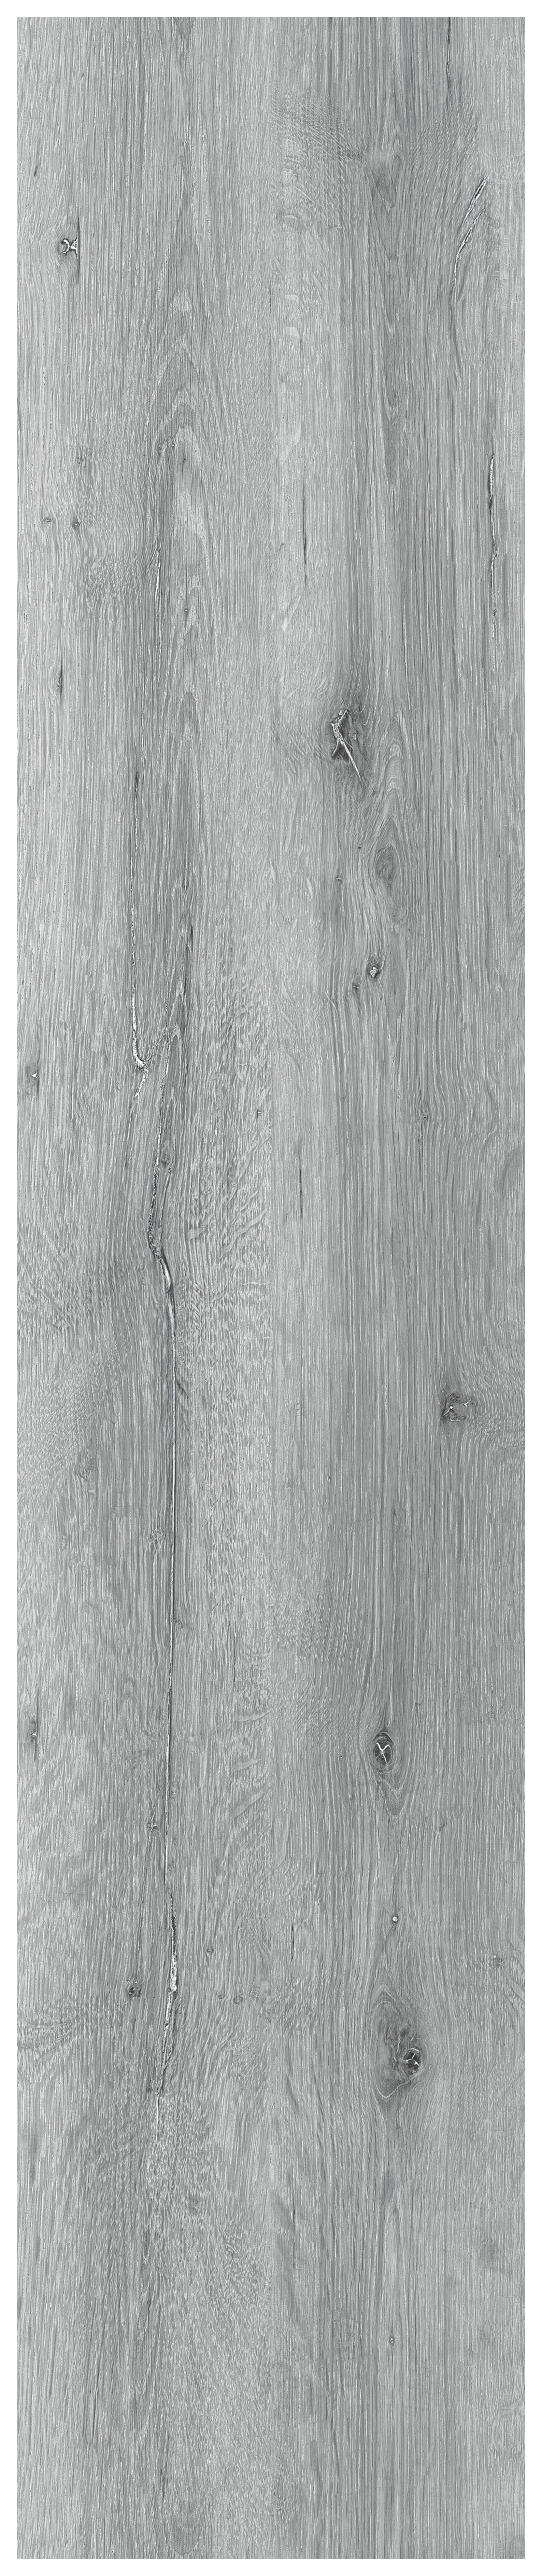 Carisbrooke Silver Oak Herringbone Spc Flooring with Integrated Underlay - Sample